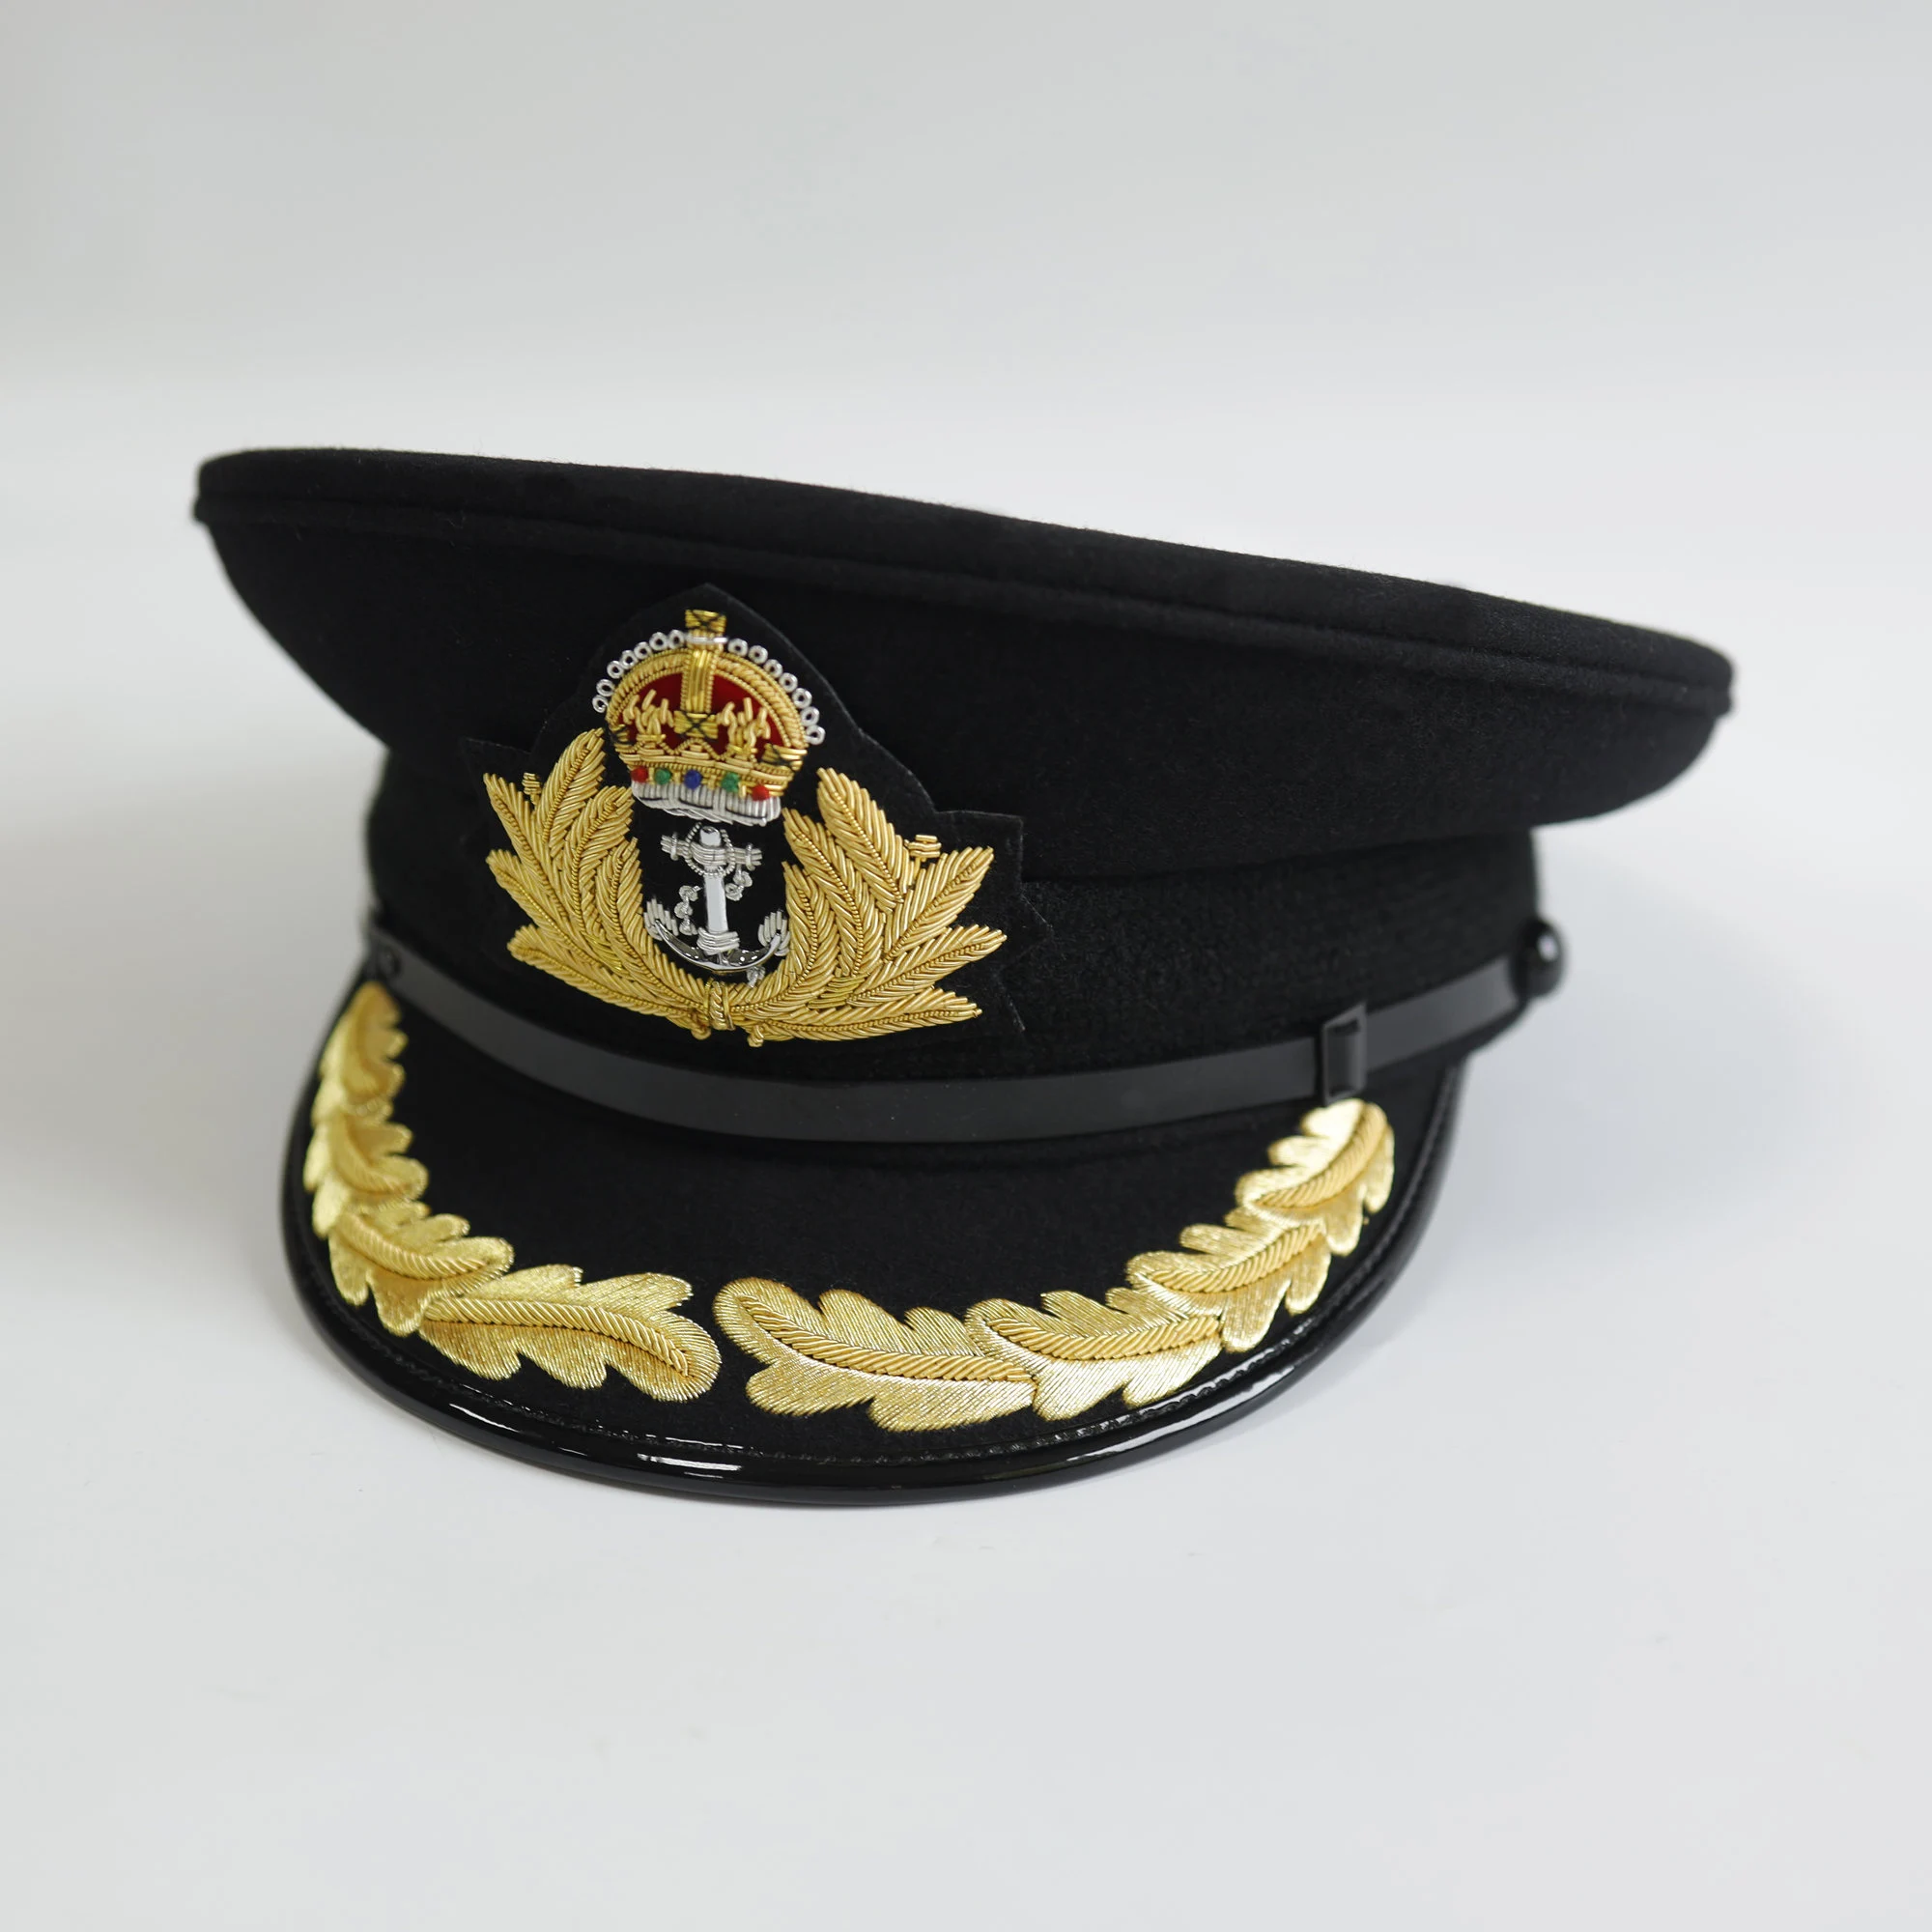 High Qualitary British Army Cap Navy Cap Headgear Wide Brim Big Lip Cap Gift Uniform Military Gift